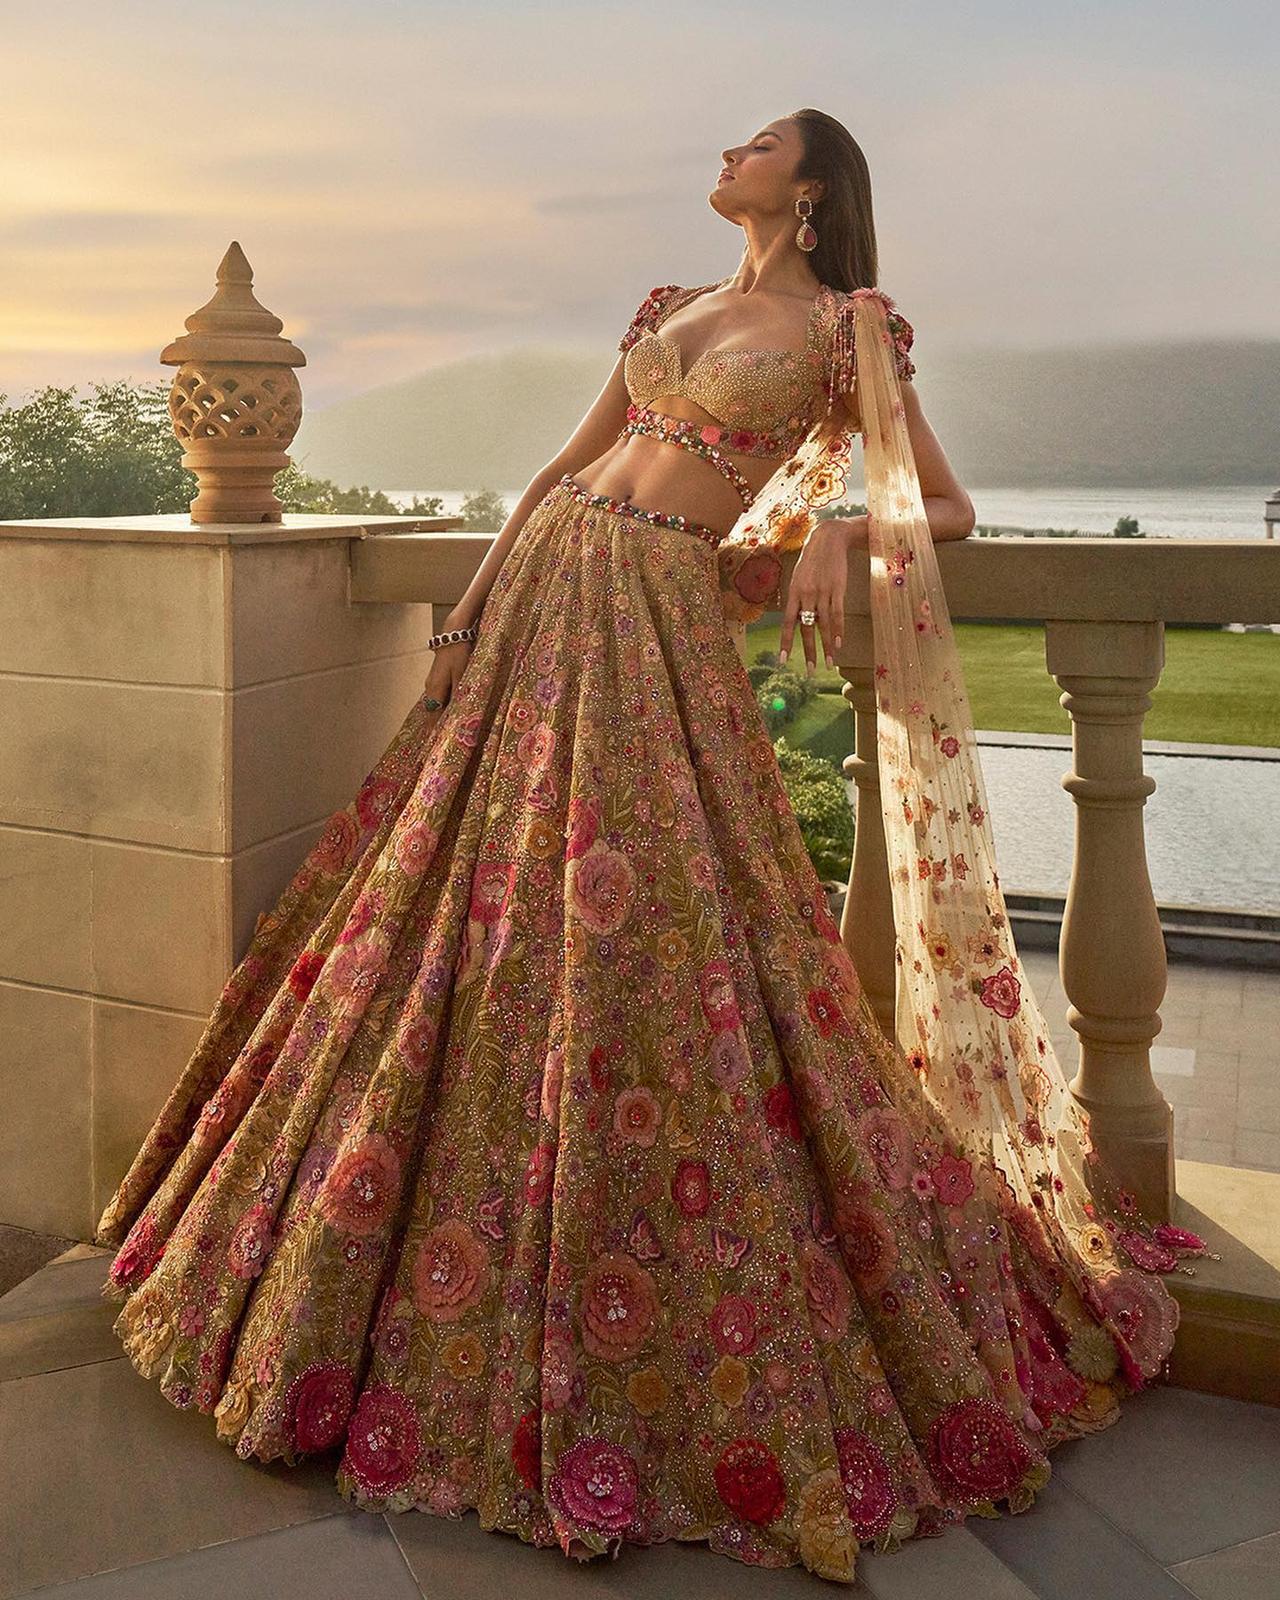 Top 10 Trending Indian Wedding Dresses For Girls 2021